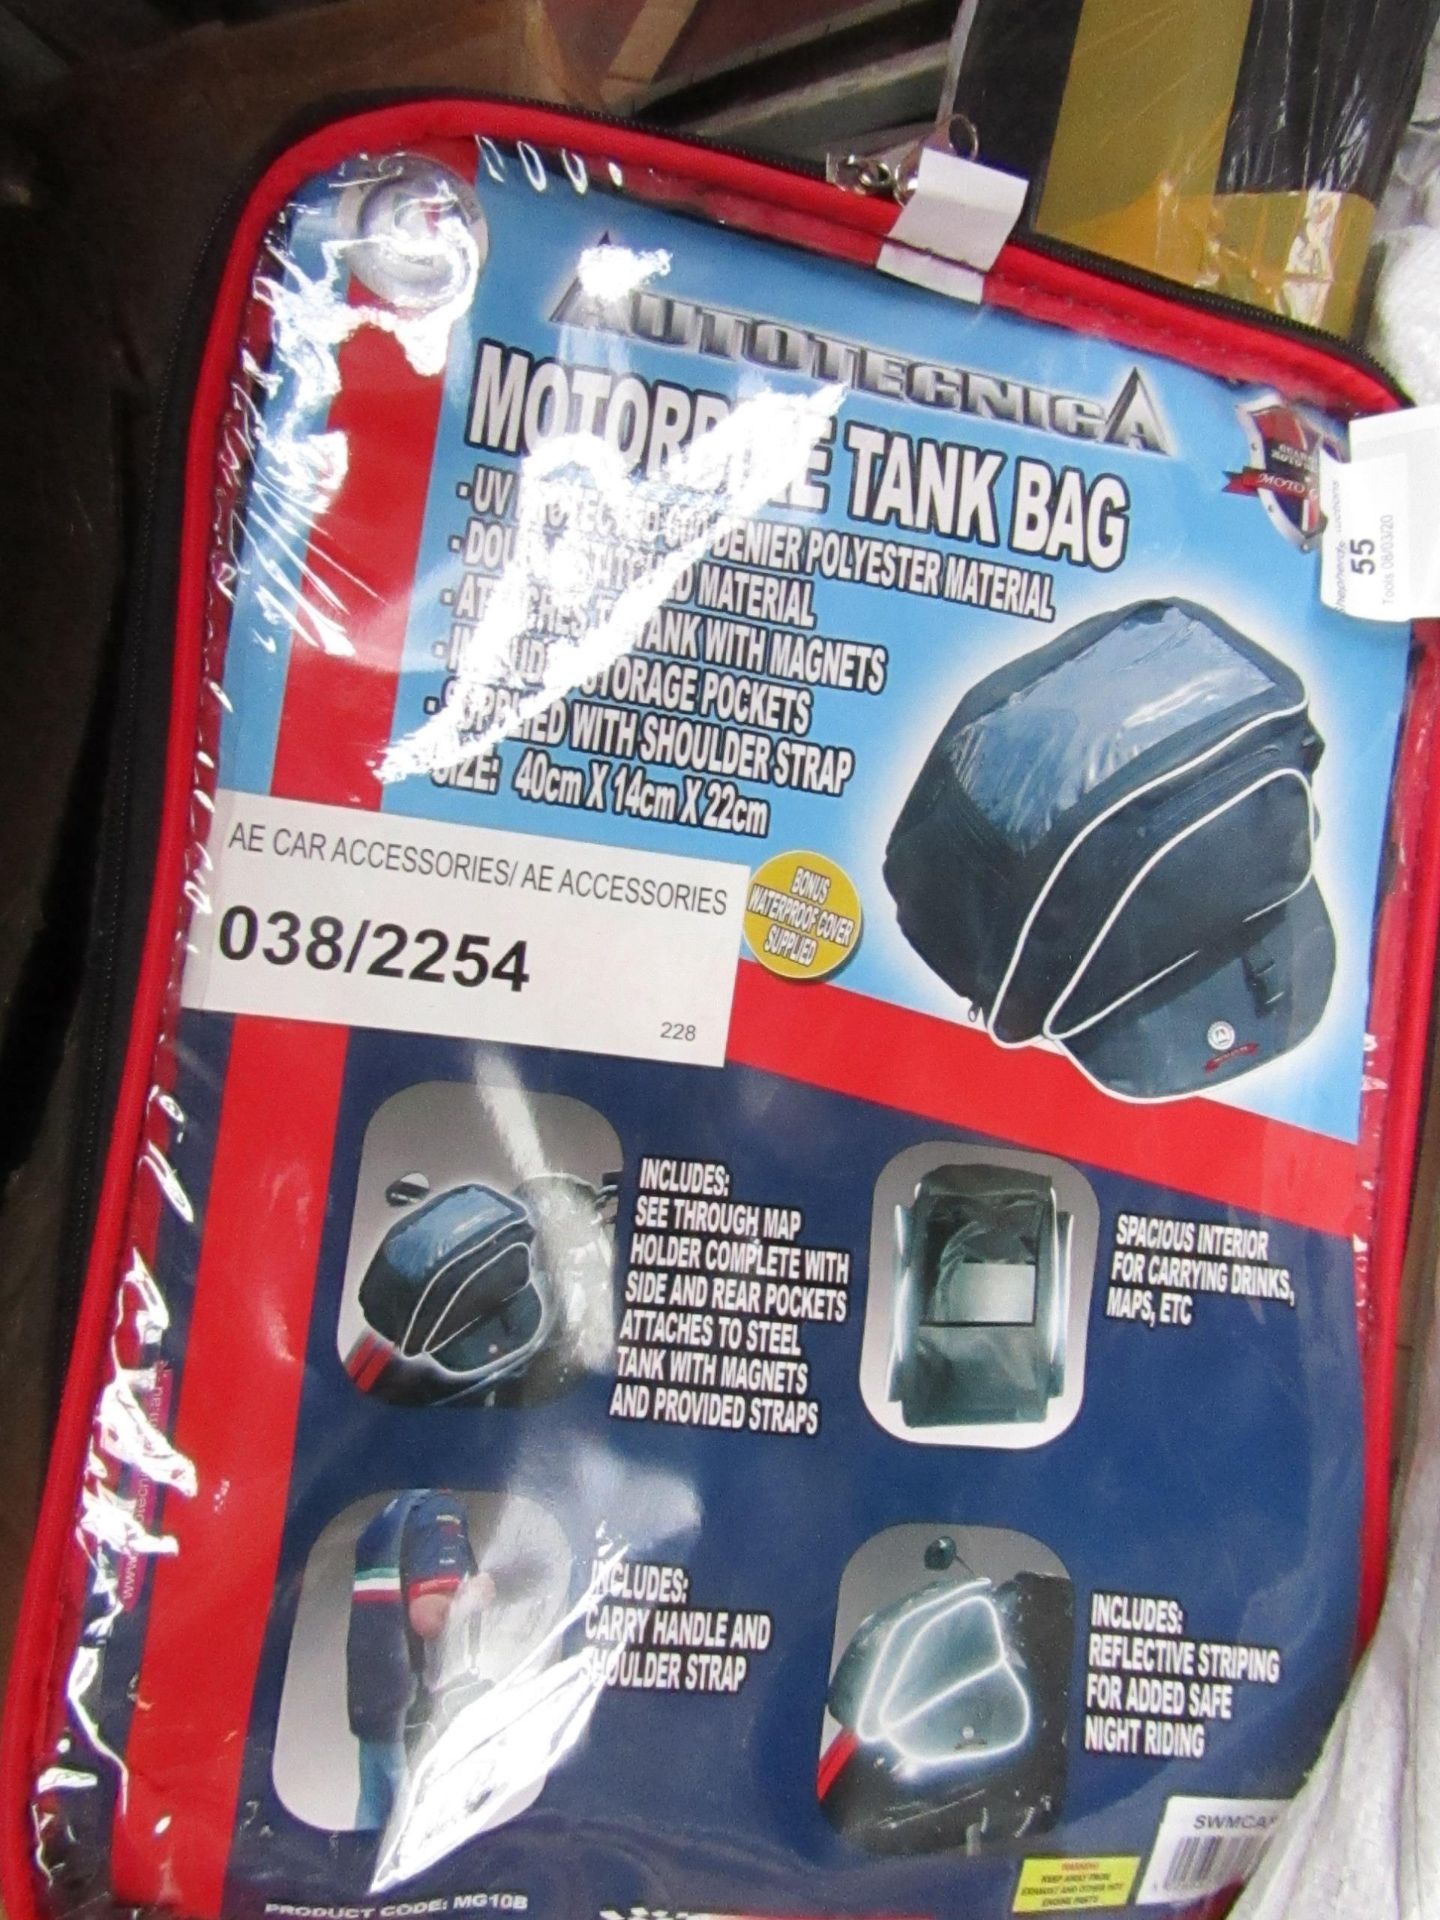 Motor Bike Tank Travel Bag, new in packaging